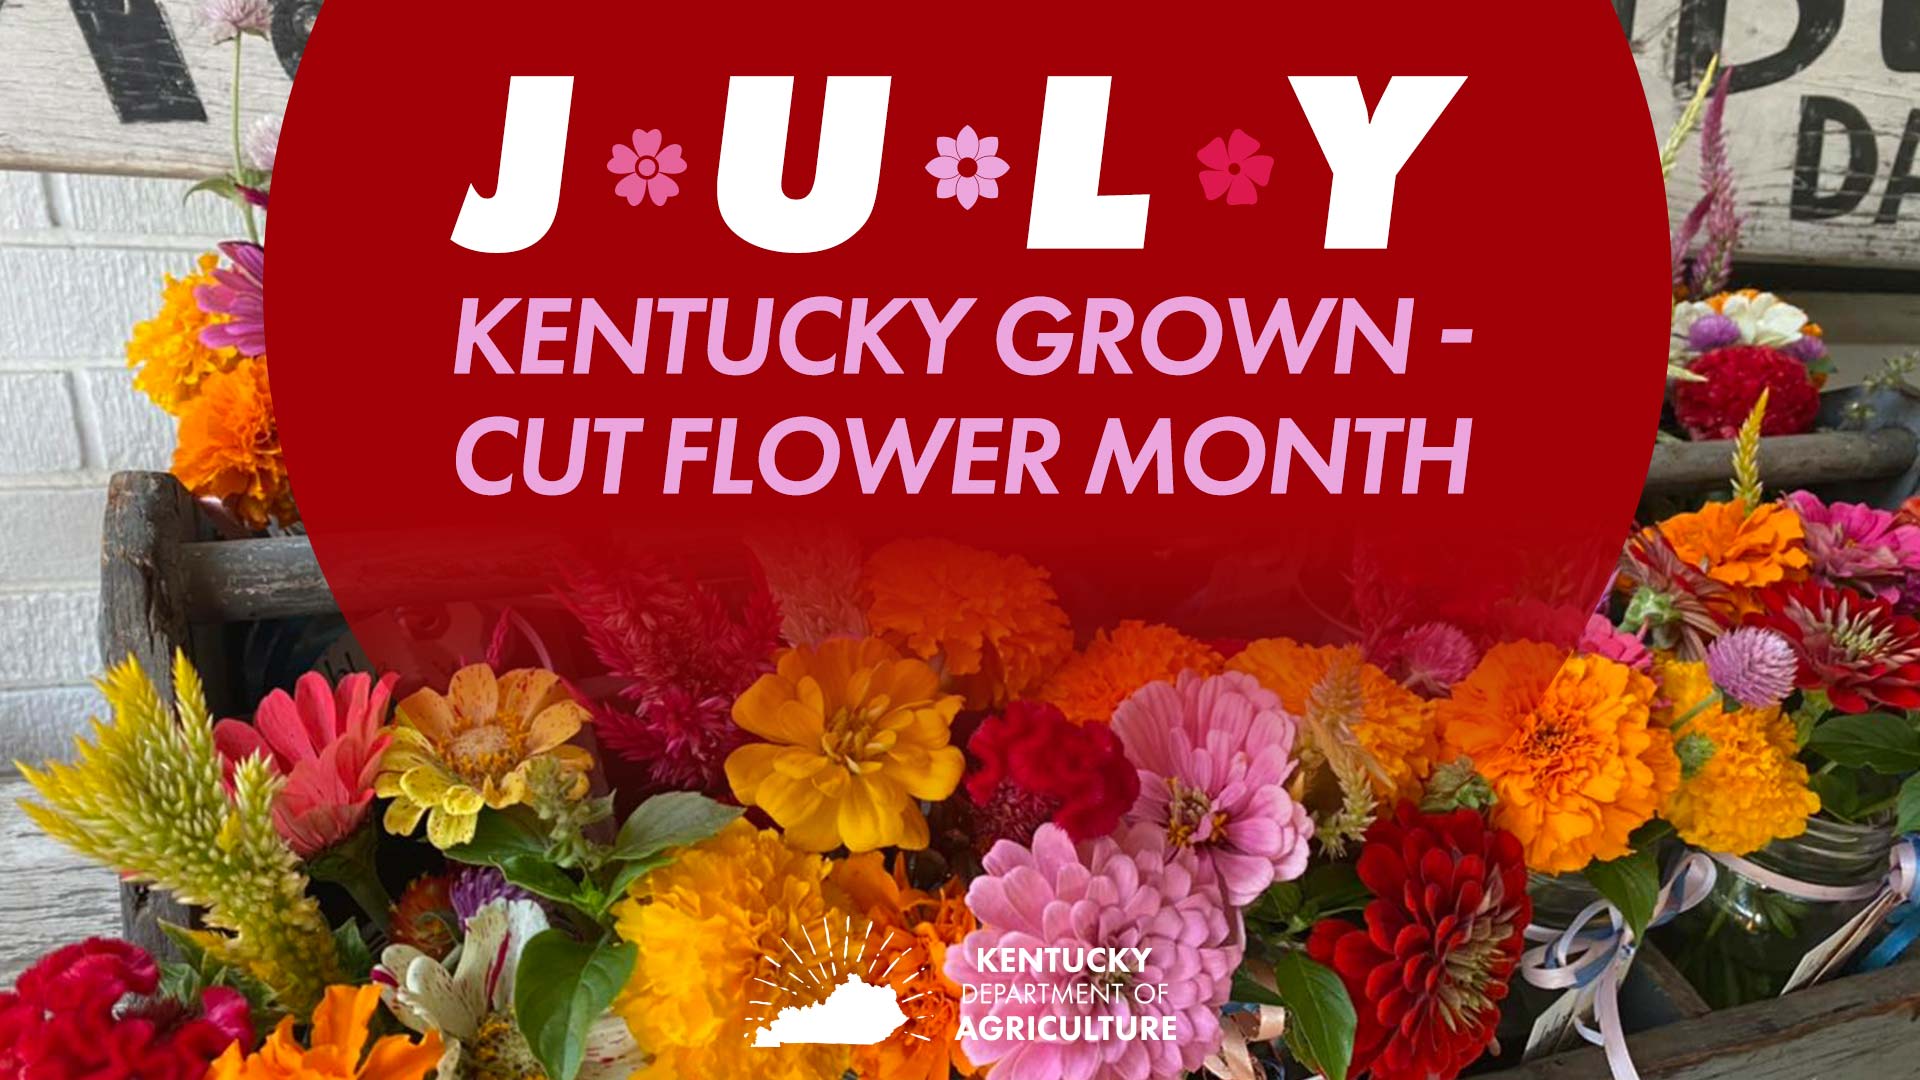 Cut flower month